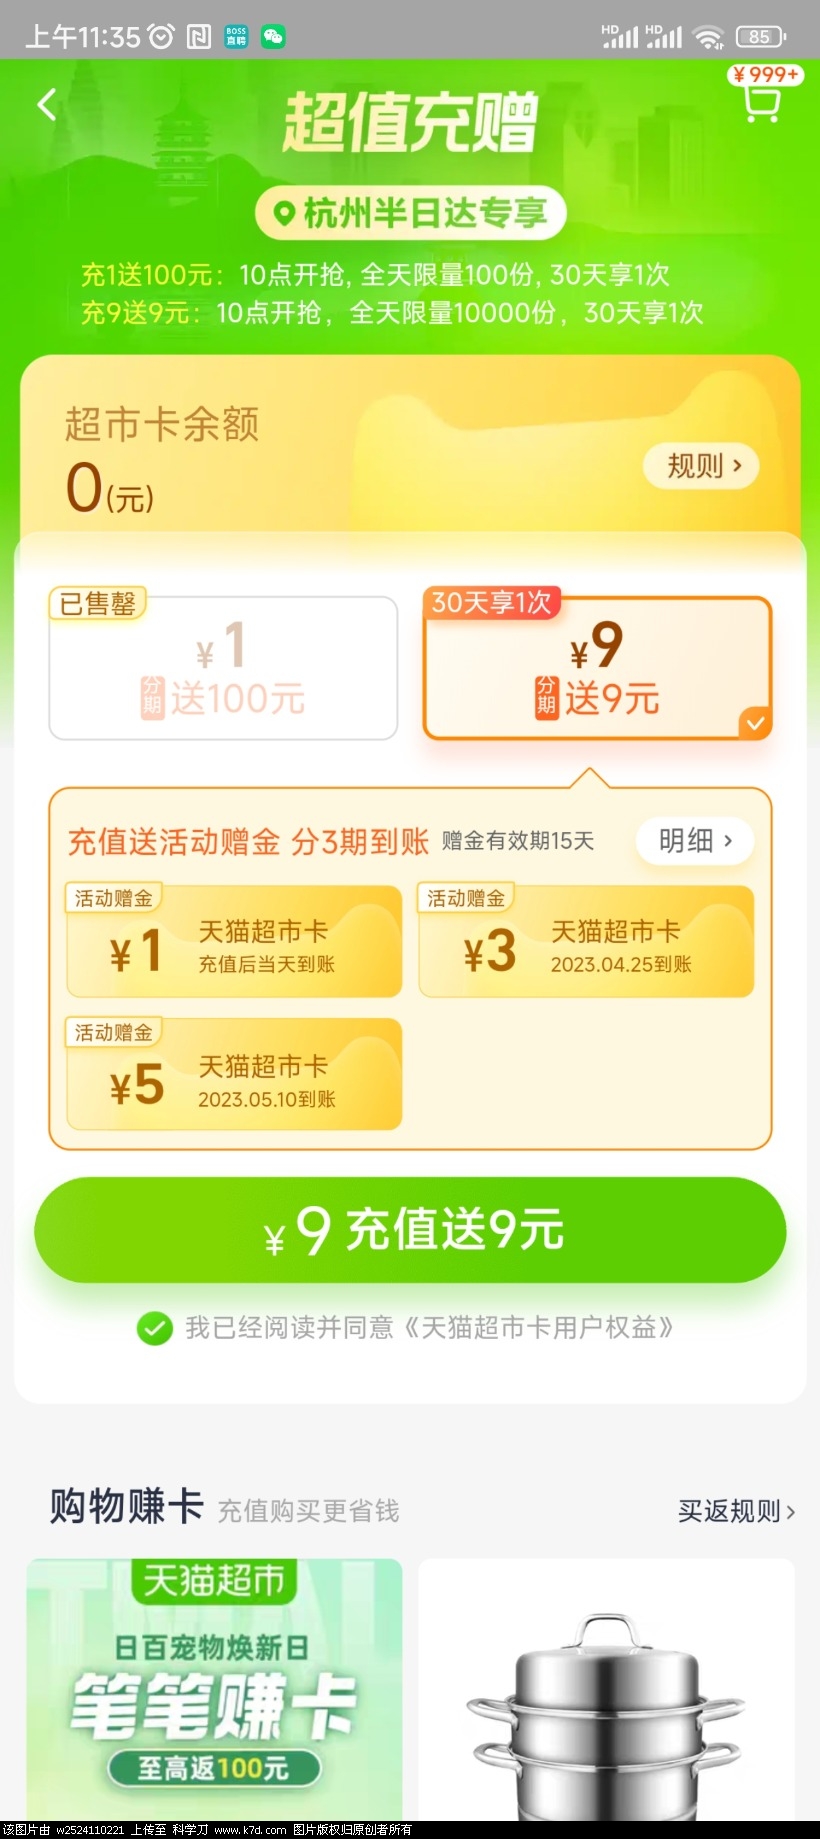 Screenshot_2023-04-10-11-35-49-692_com.taobao.taobao.jpg